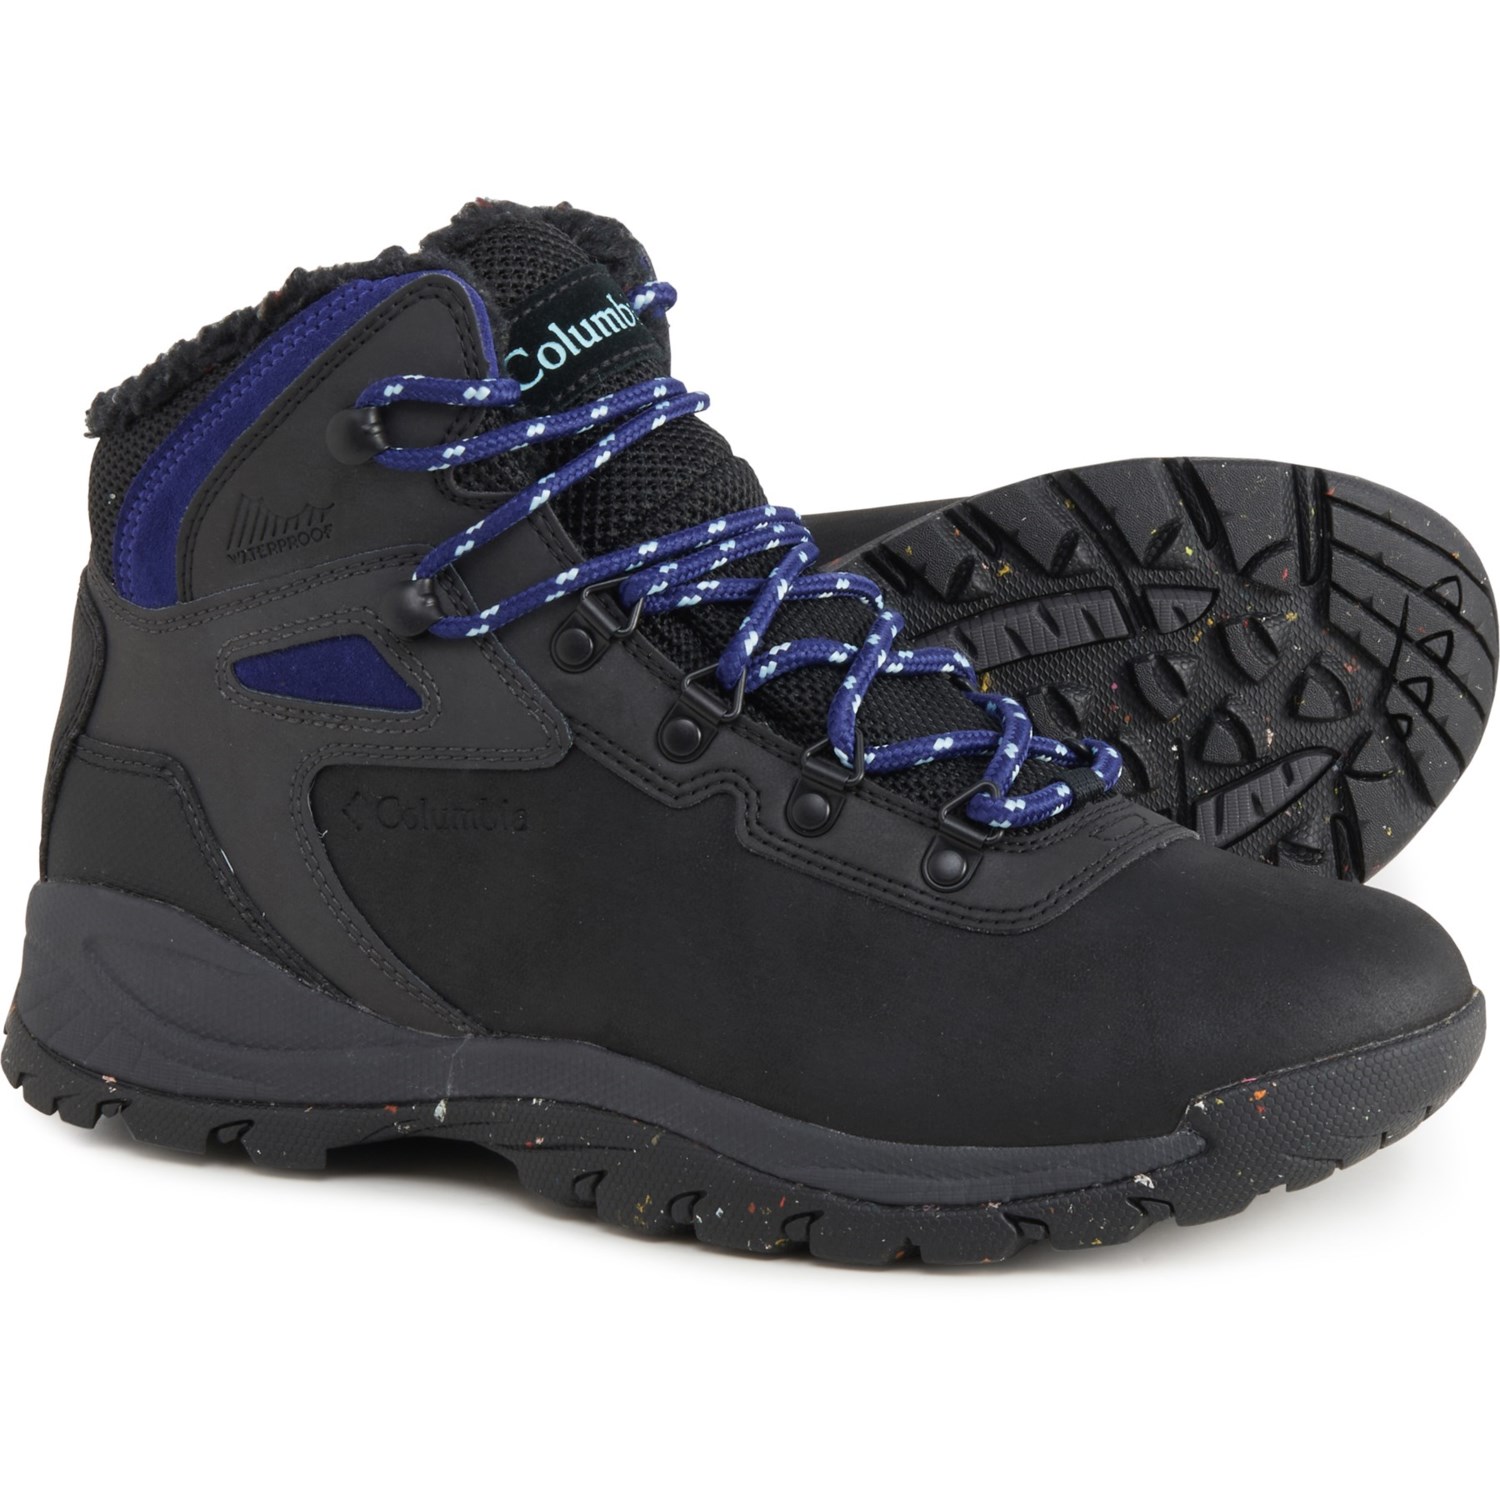 Columbia Sportswear Newton Ridge Plus Omni-Heat Hiking Boots - Waterproof, Insulated (For Women)